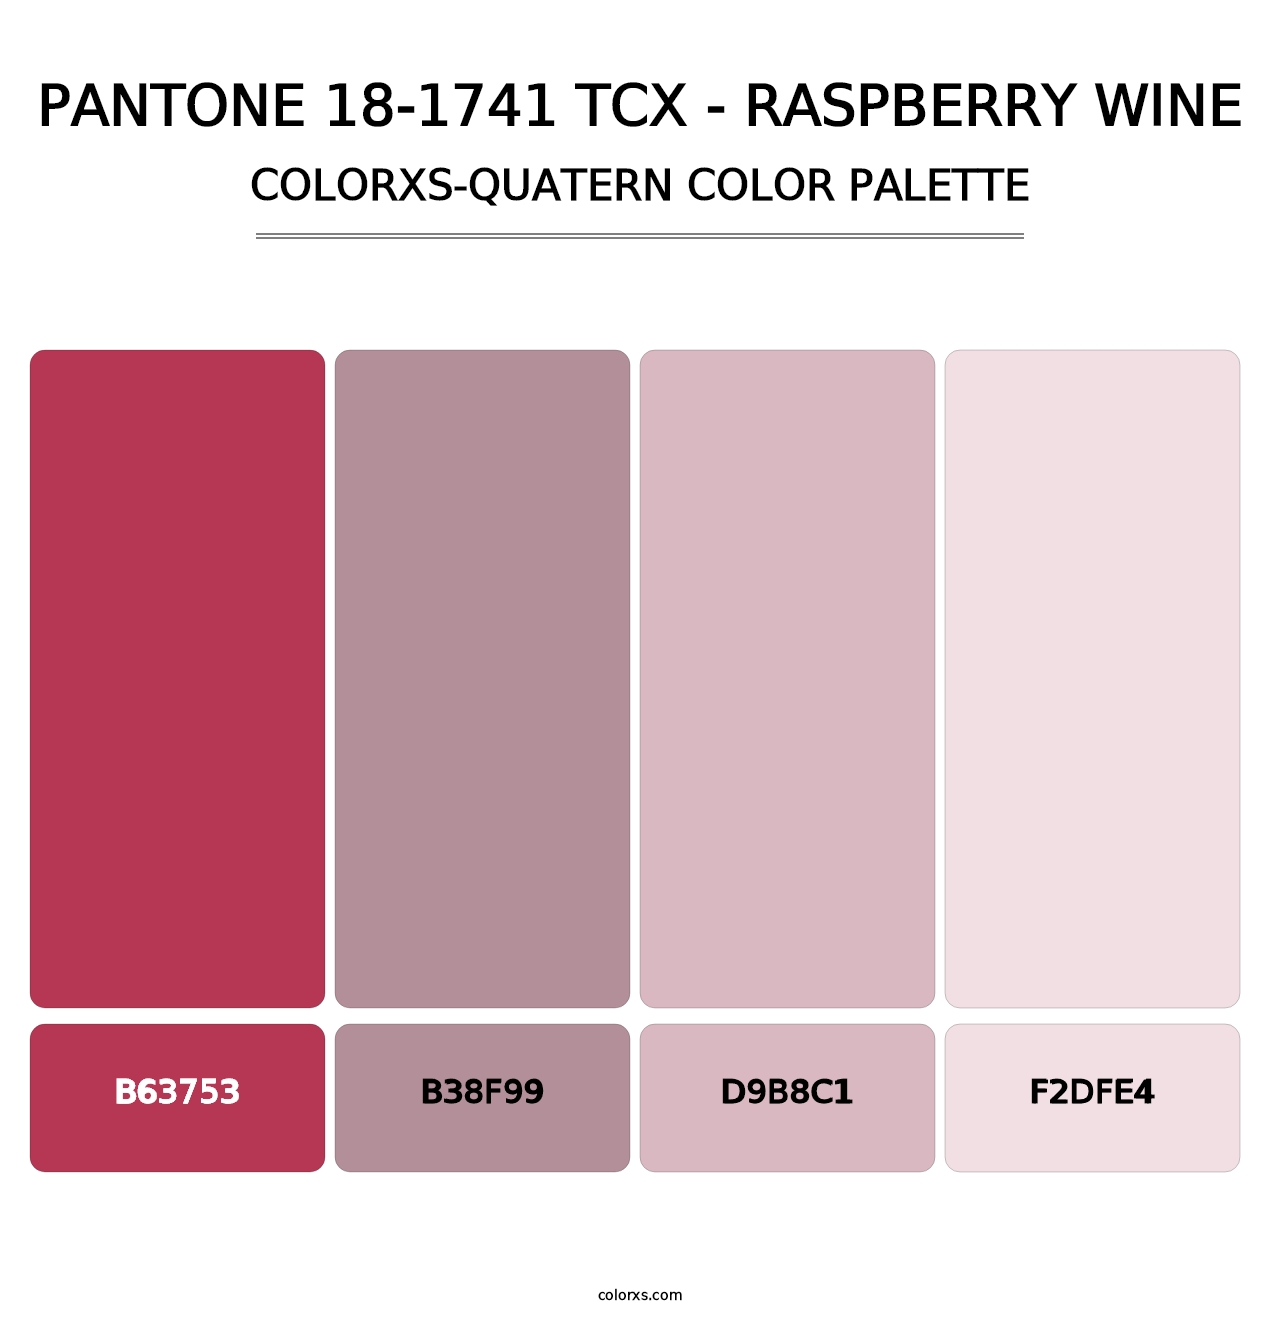 PANTONE 18-1741 TCX - Raspberry Wine - Colorxs Quatern Palette